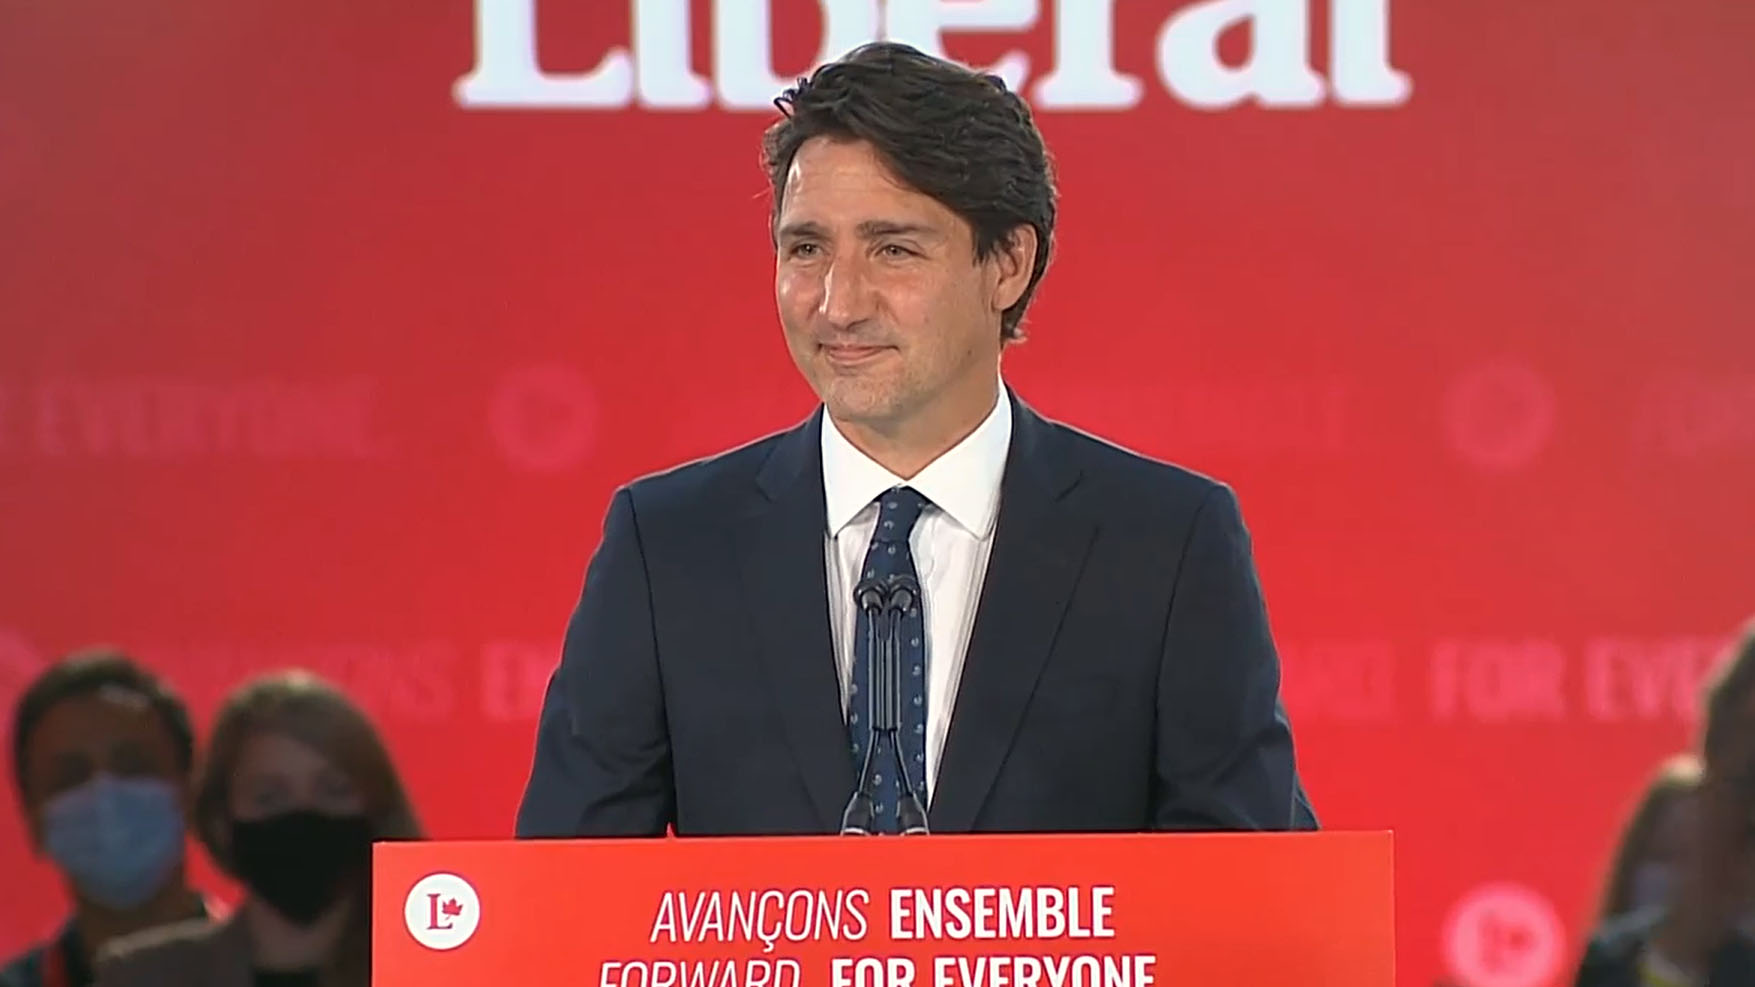 Justin Trudeau’s Liberals Win Elections In Canada